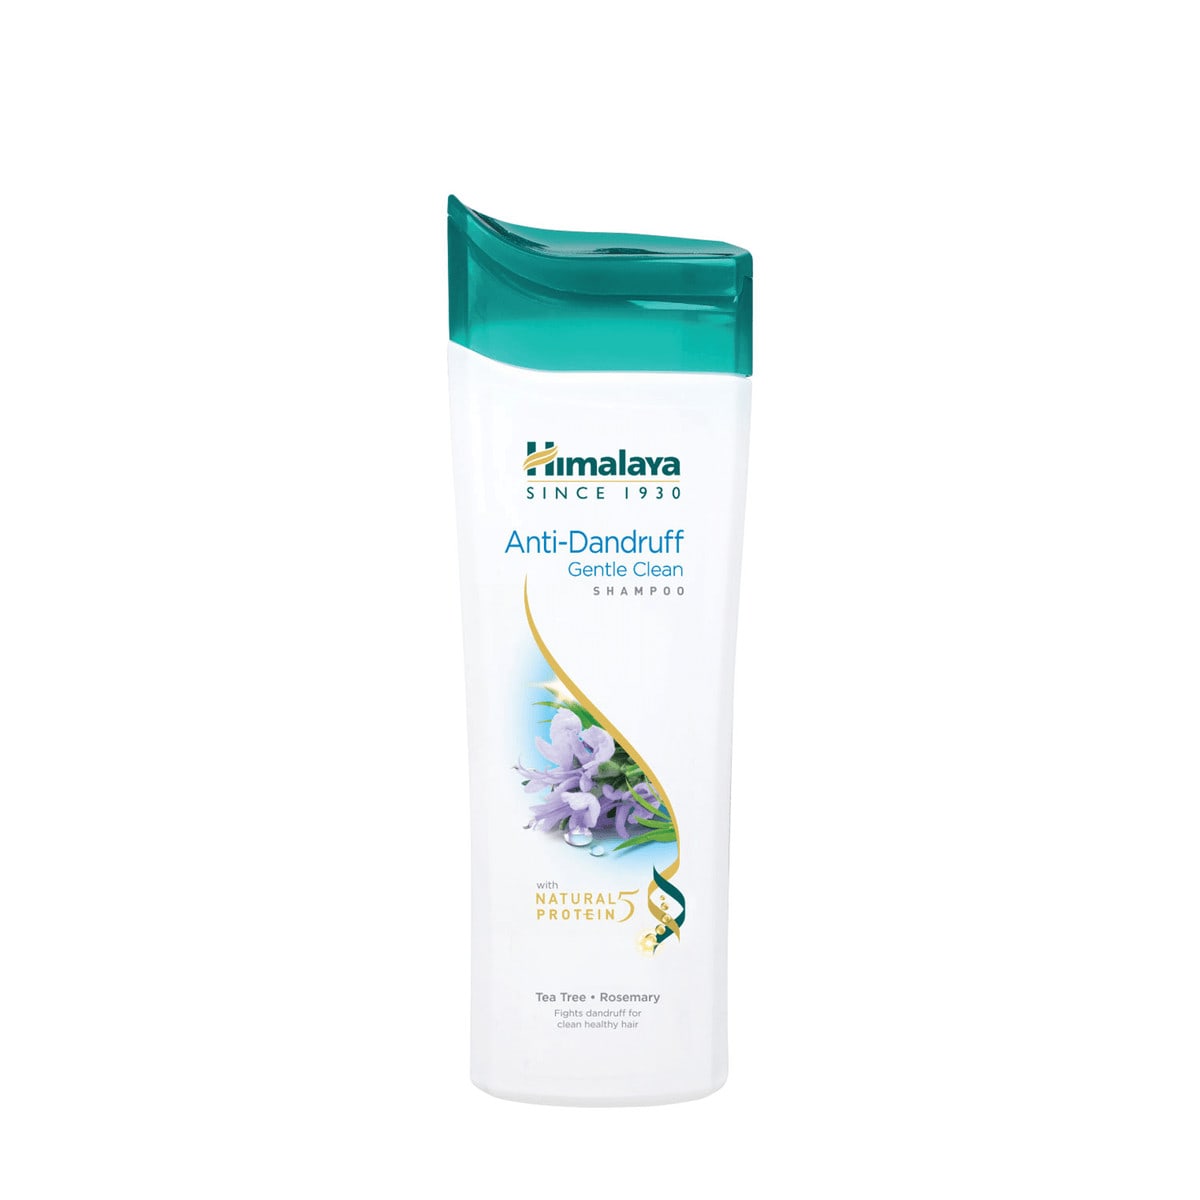 Himalaya Anti-Dandruff Gentle Clean Shampoo-review-singapore